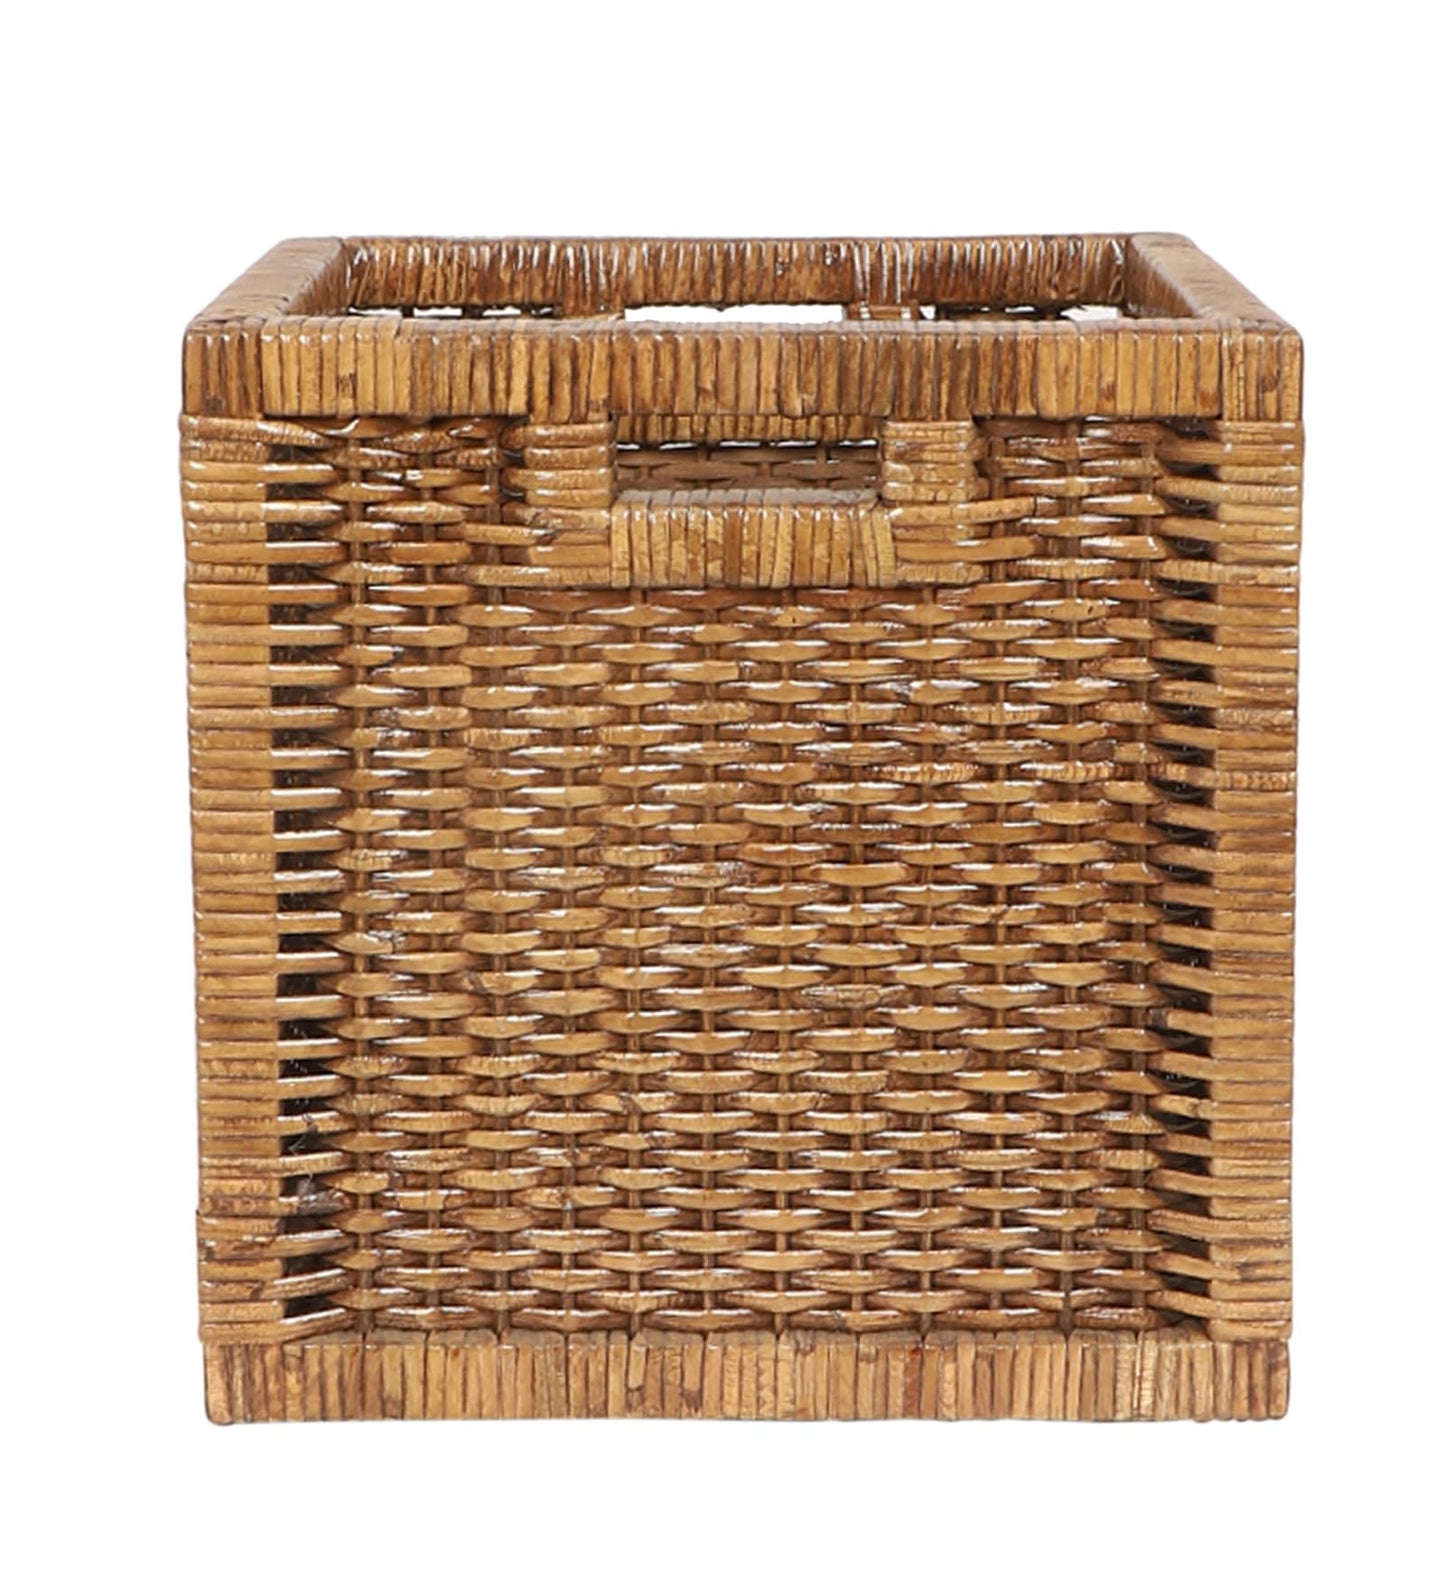 AKWAY Wicker wardrobe basket for storage, cloths, newspapers, photos, toys, plants or other memorabilia, 12.5 x 13.5 x 12.5 Inch, Beige (12.5W x 13.5L x 12.5H, Brown)- Akway